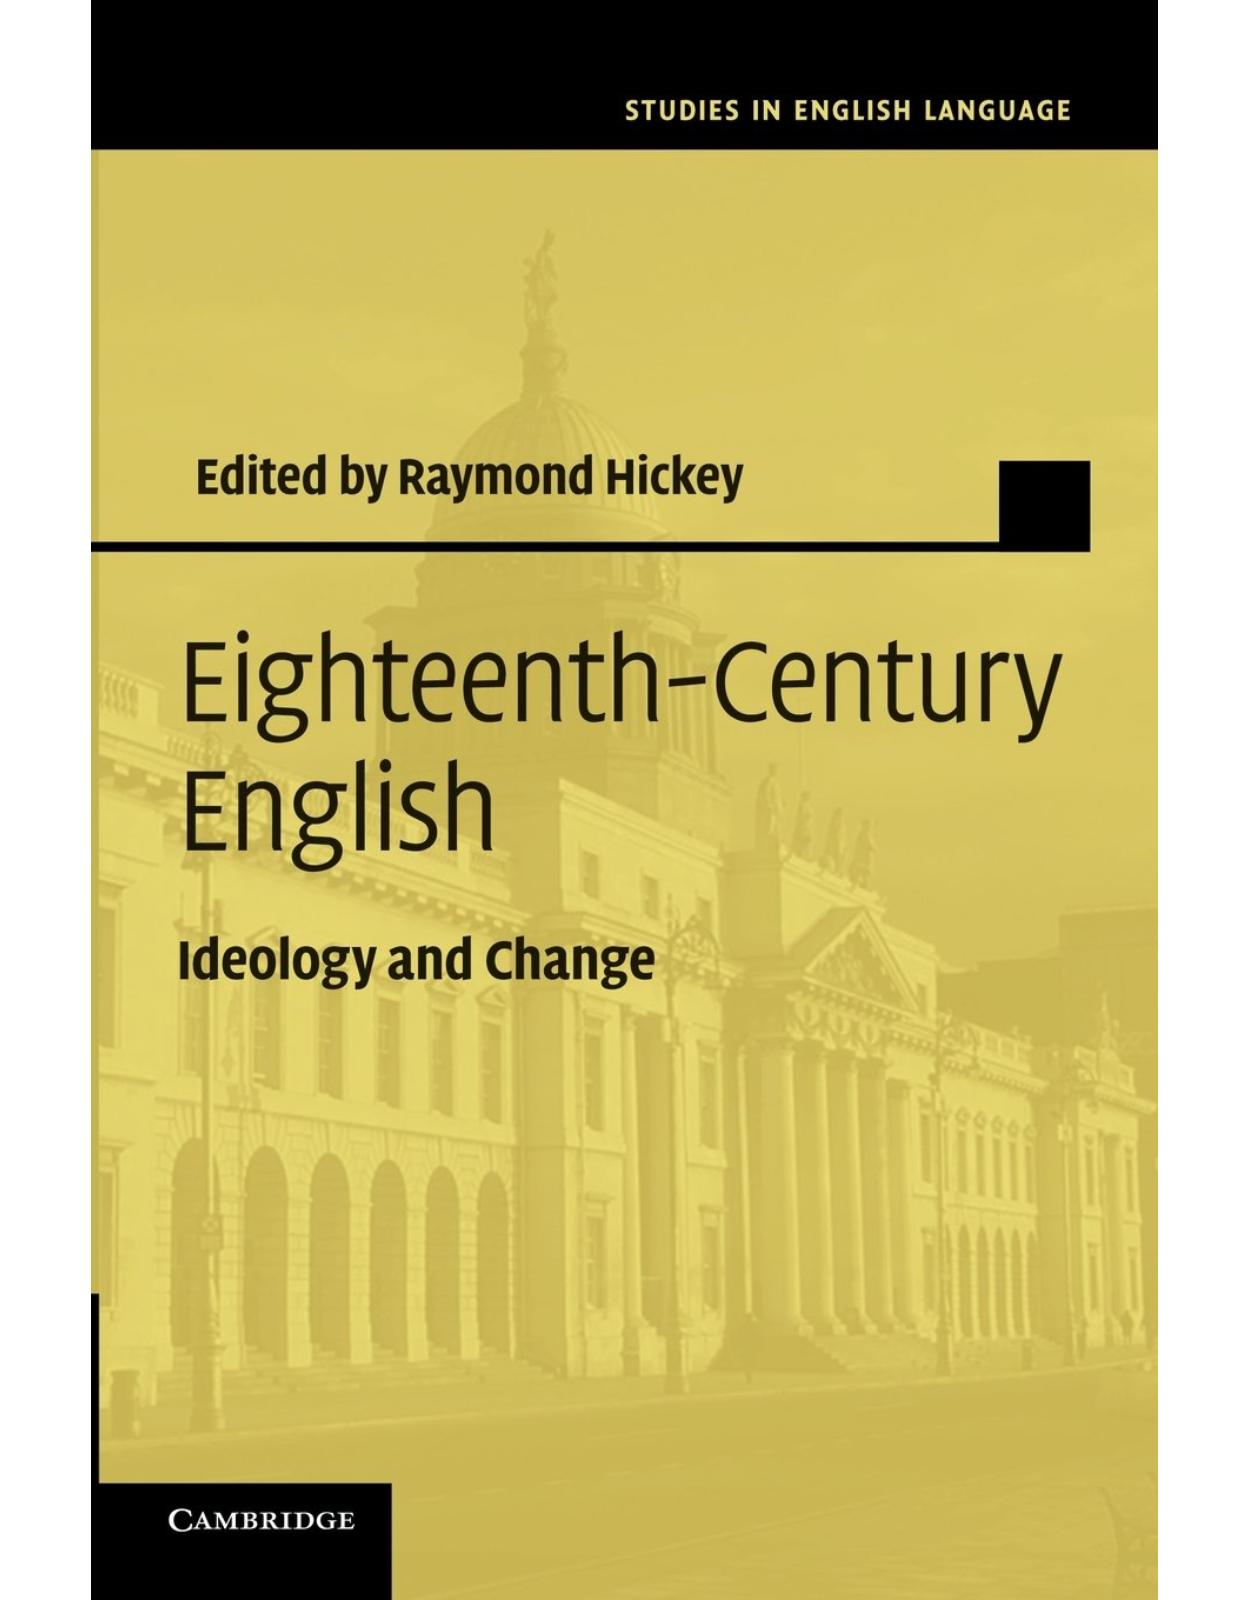 Eighteenth-Century English: Ideology and Change (Studies in English Language) 